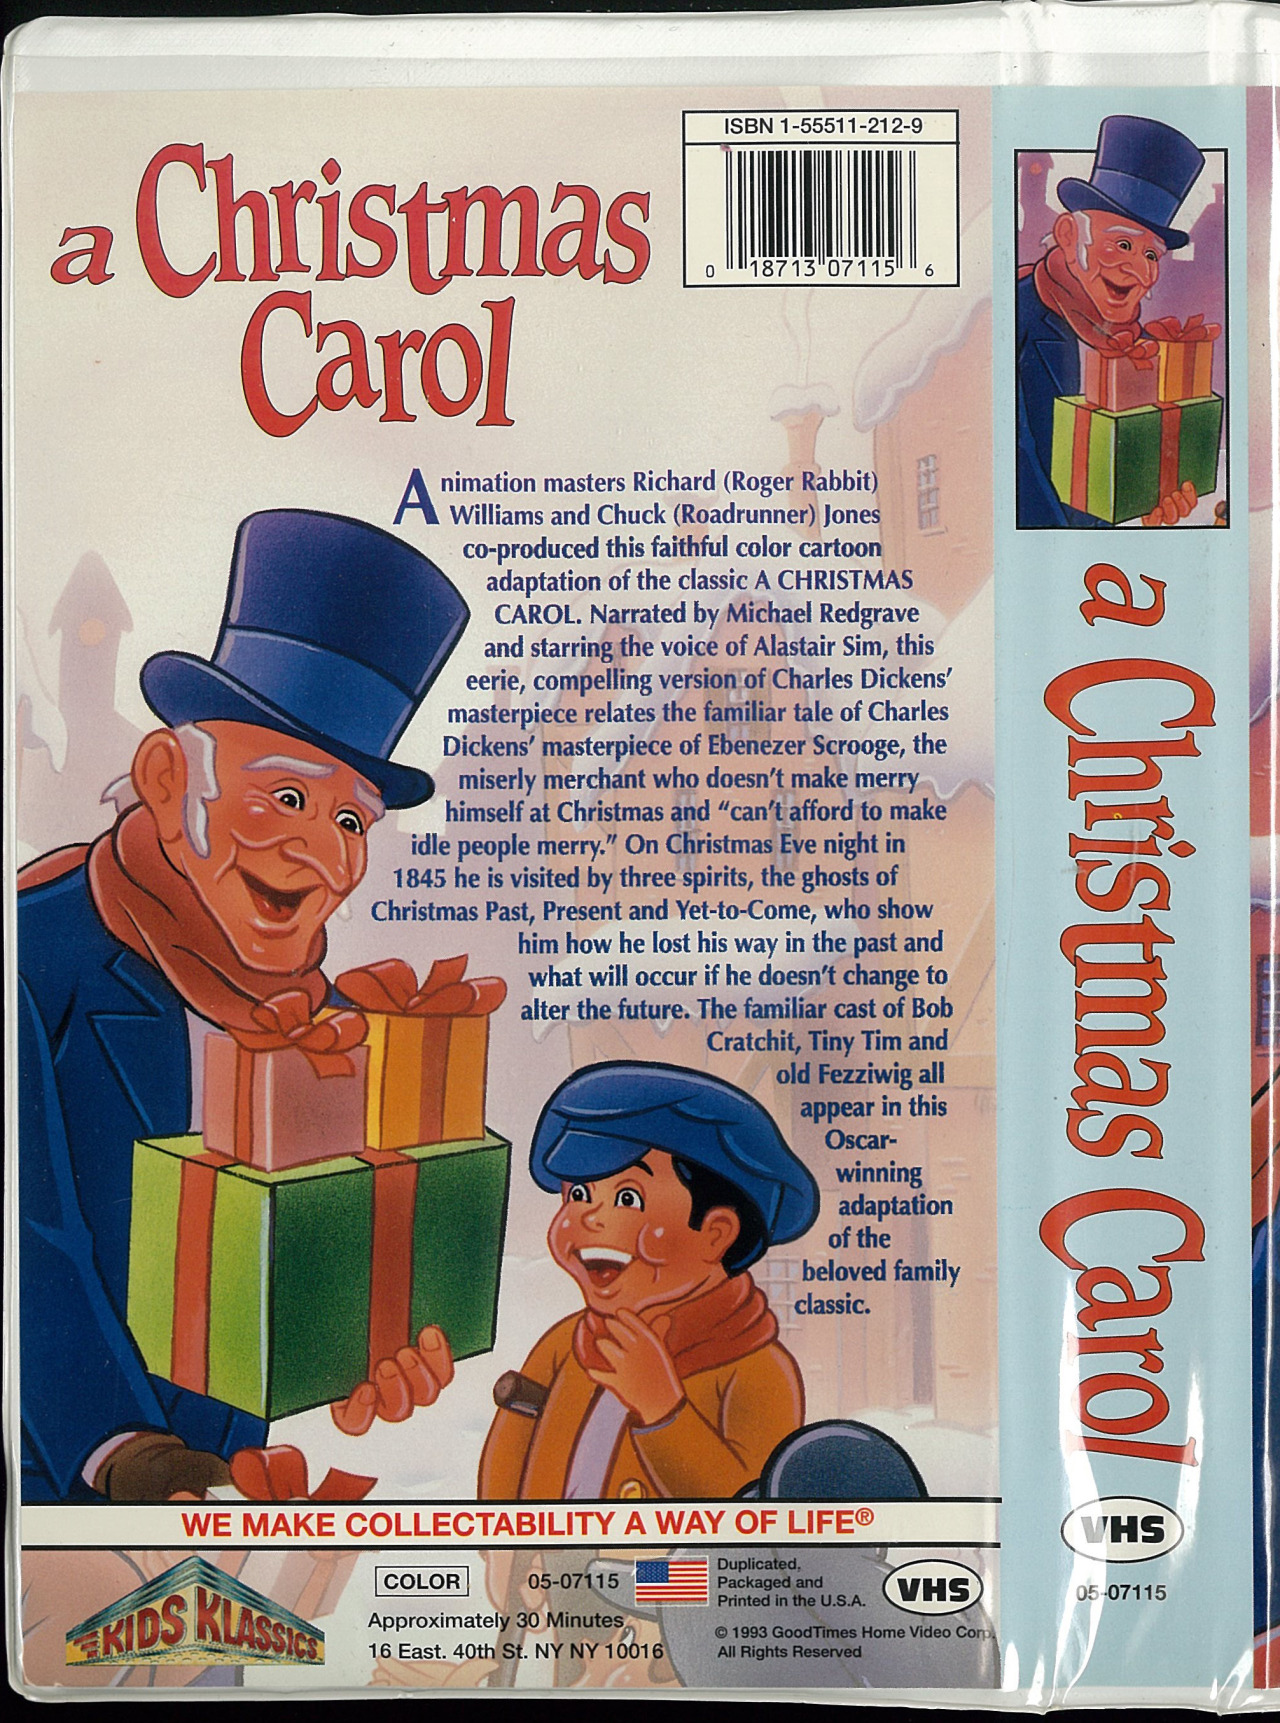 The VCR from Heck, A CHRISTMAS CAROL (1971 version, Kids Klassics...